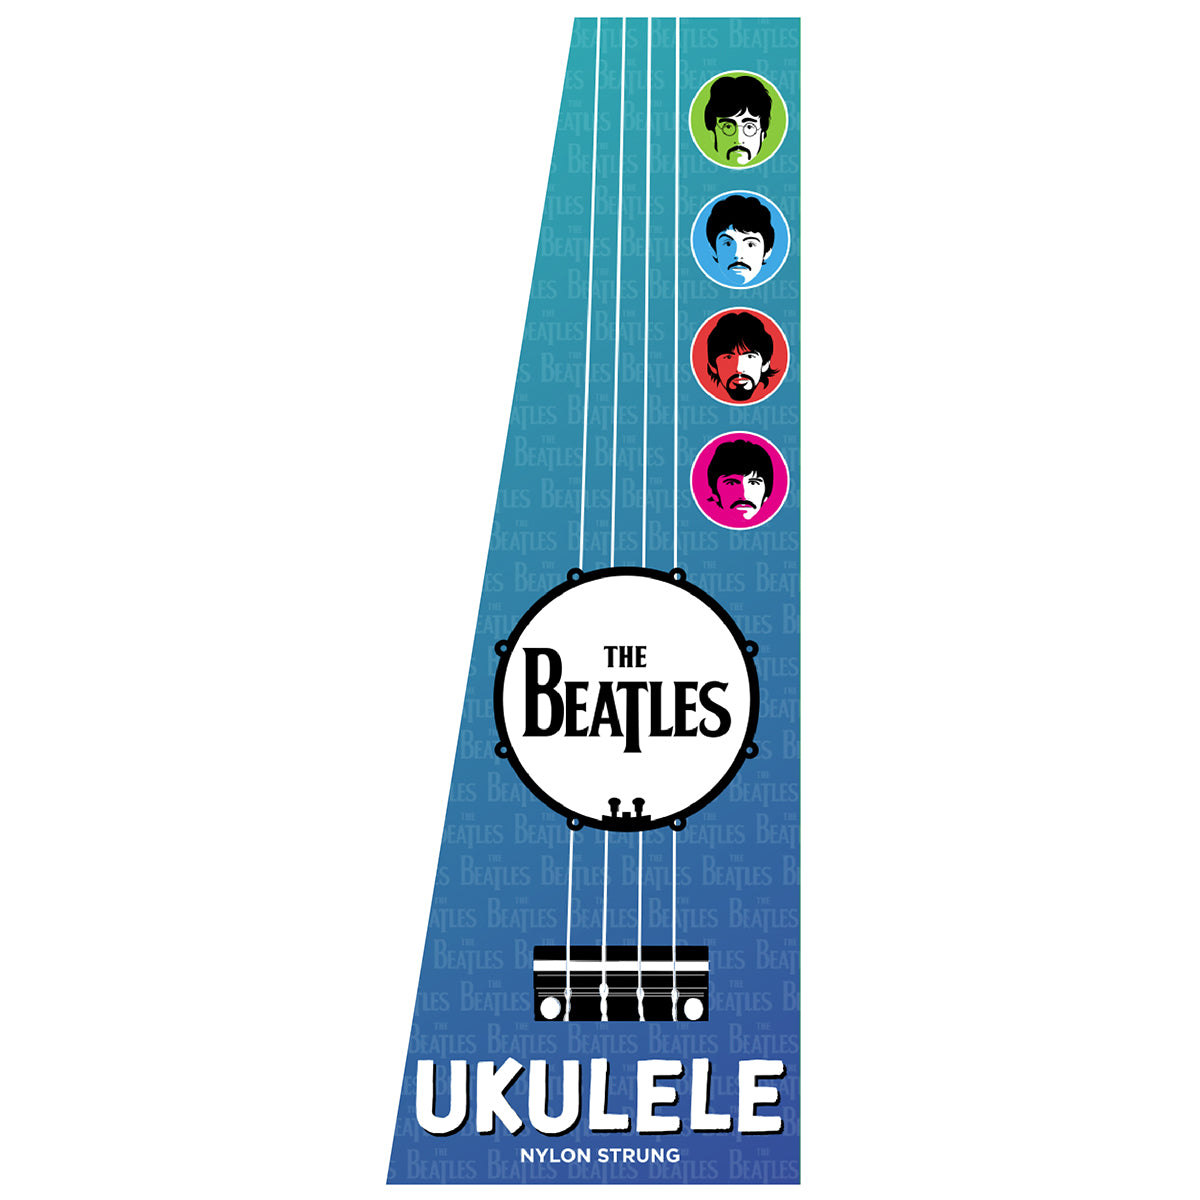 The Beatles Ukulele | Rubber Soul